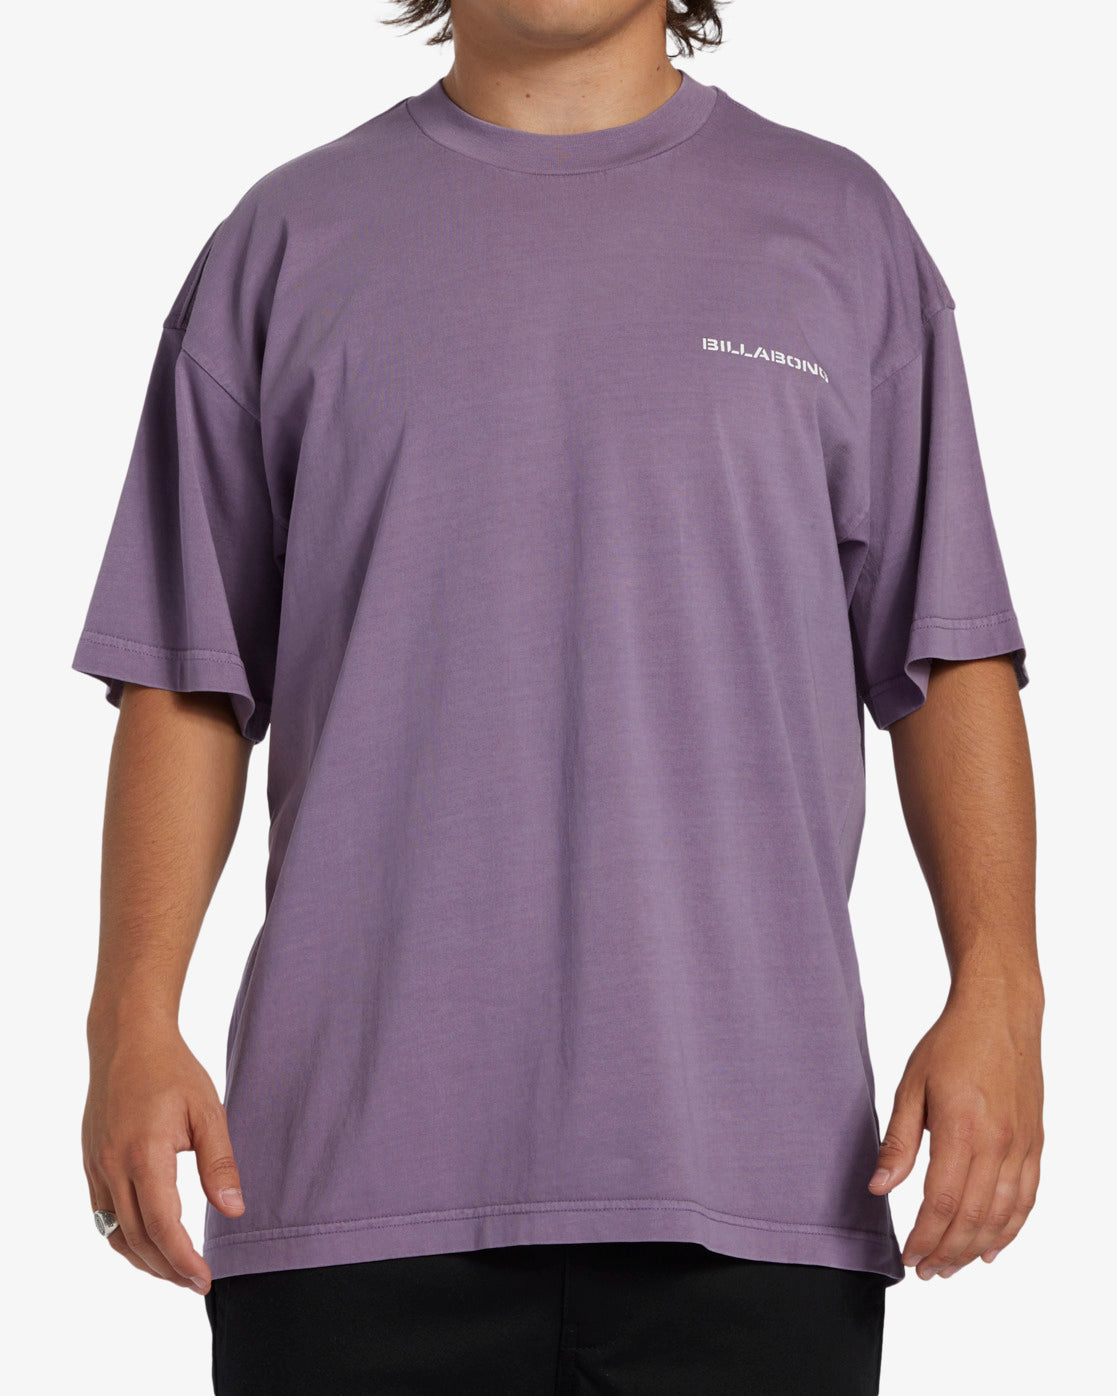 Billabong Paradise Burning T-Shirt - Washed Violet